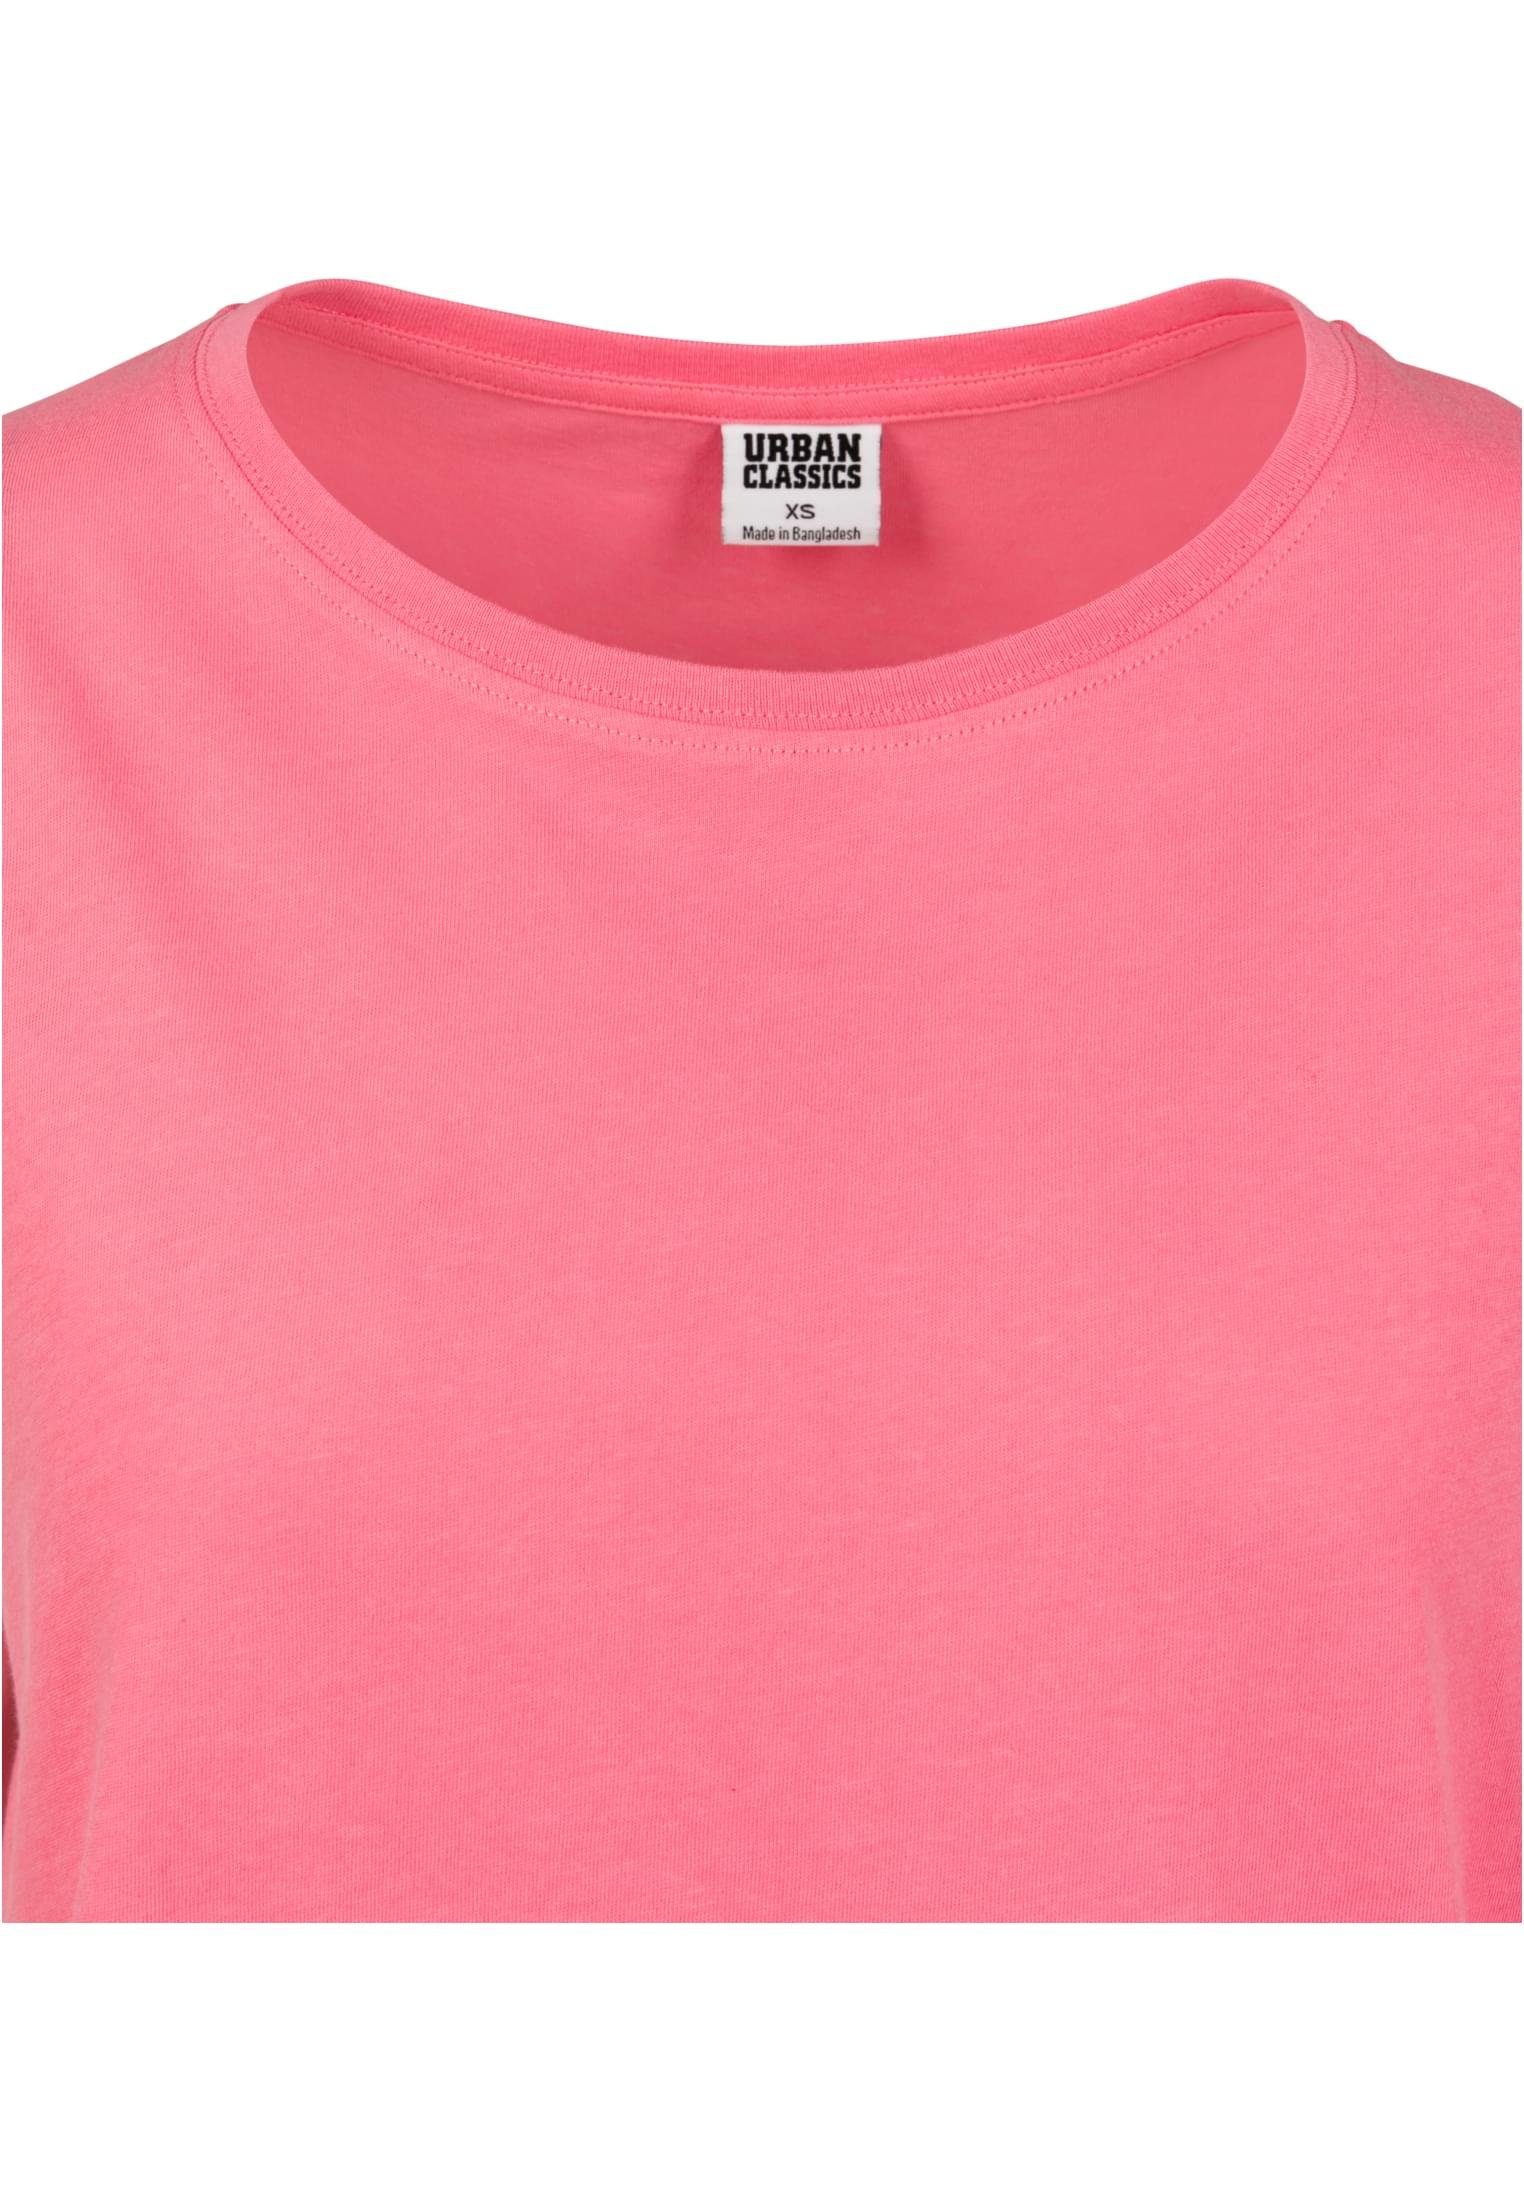 URBAN CLASSICS T-Shirt TB771 Extended Shoulder pinkgrapefruit